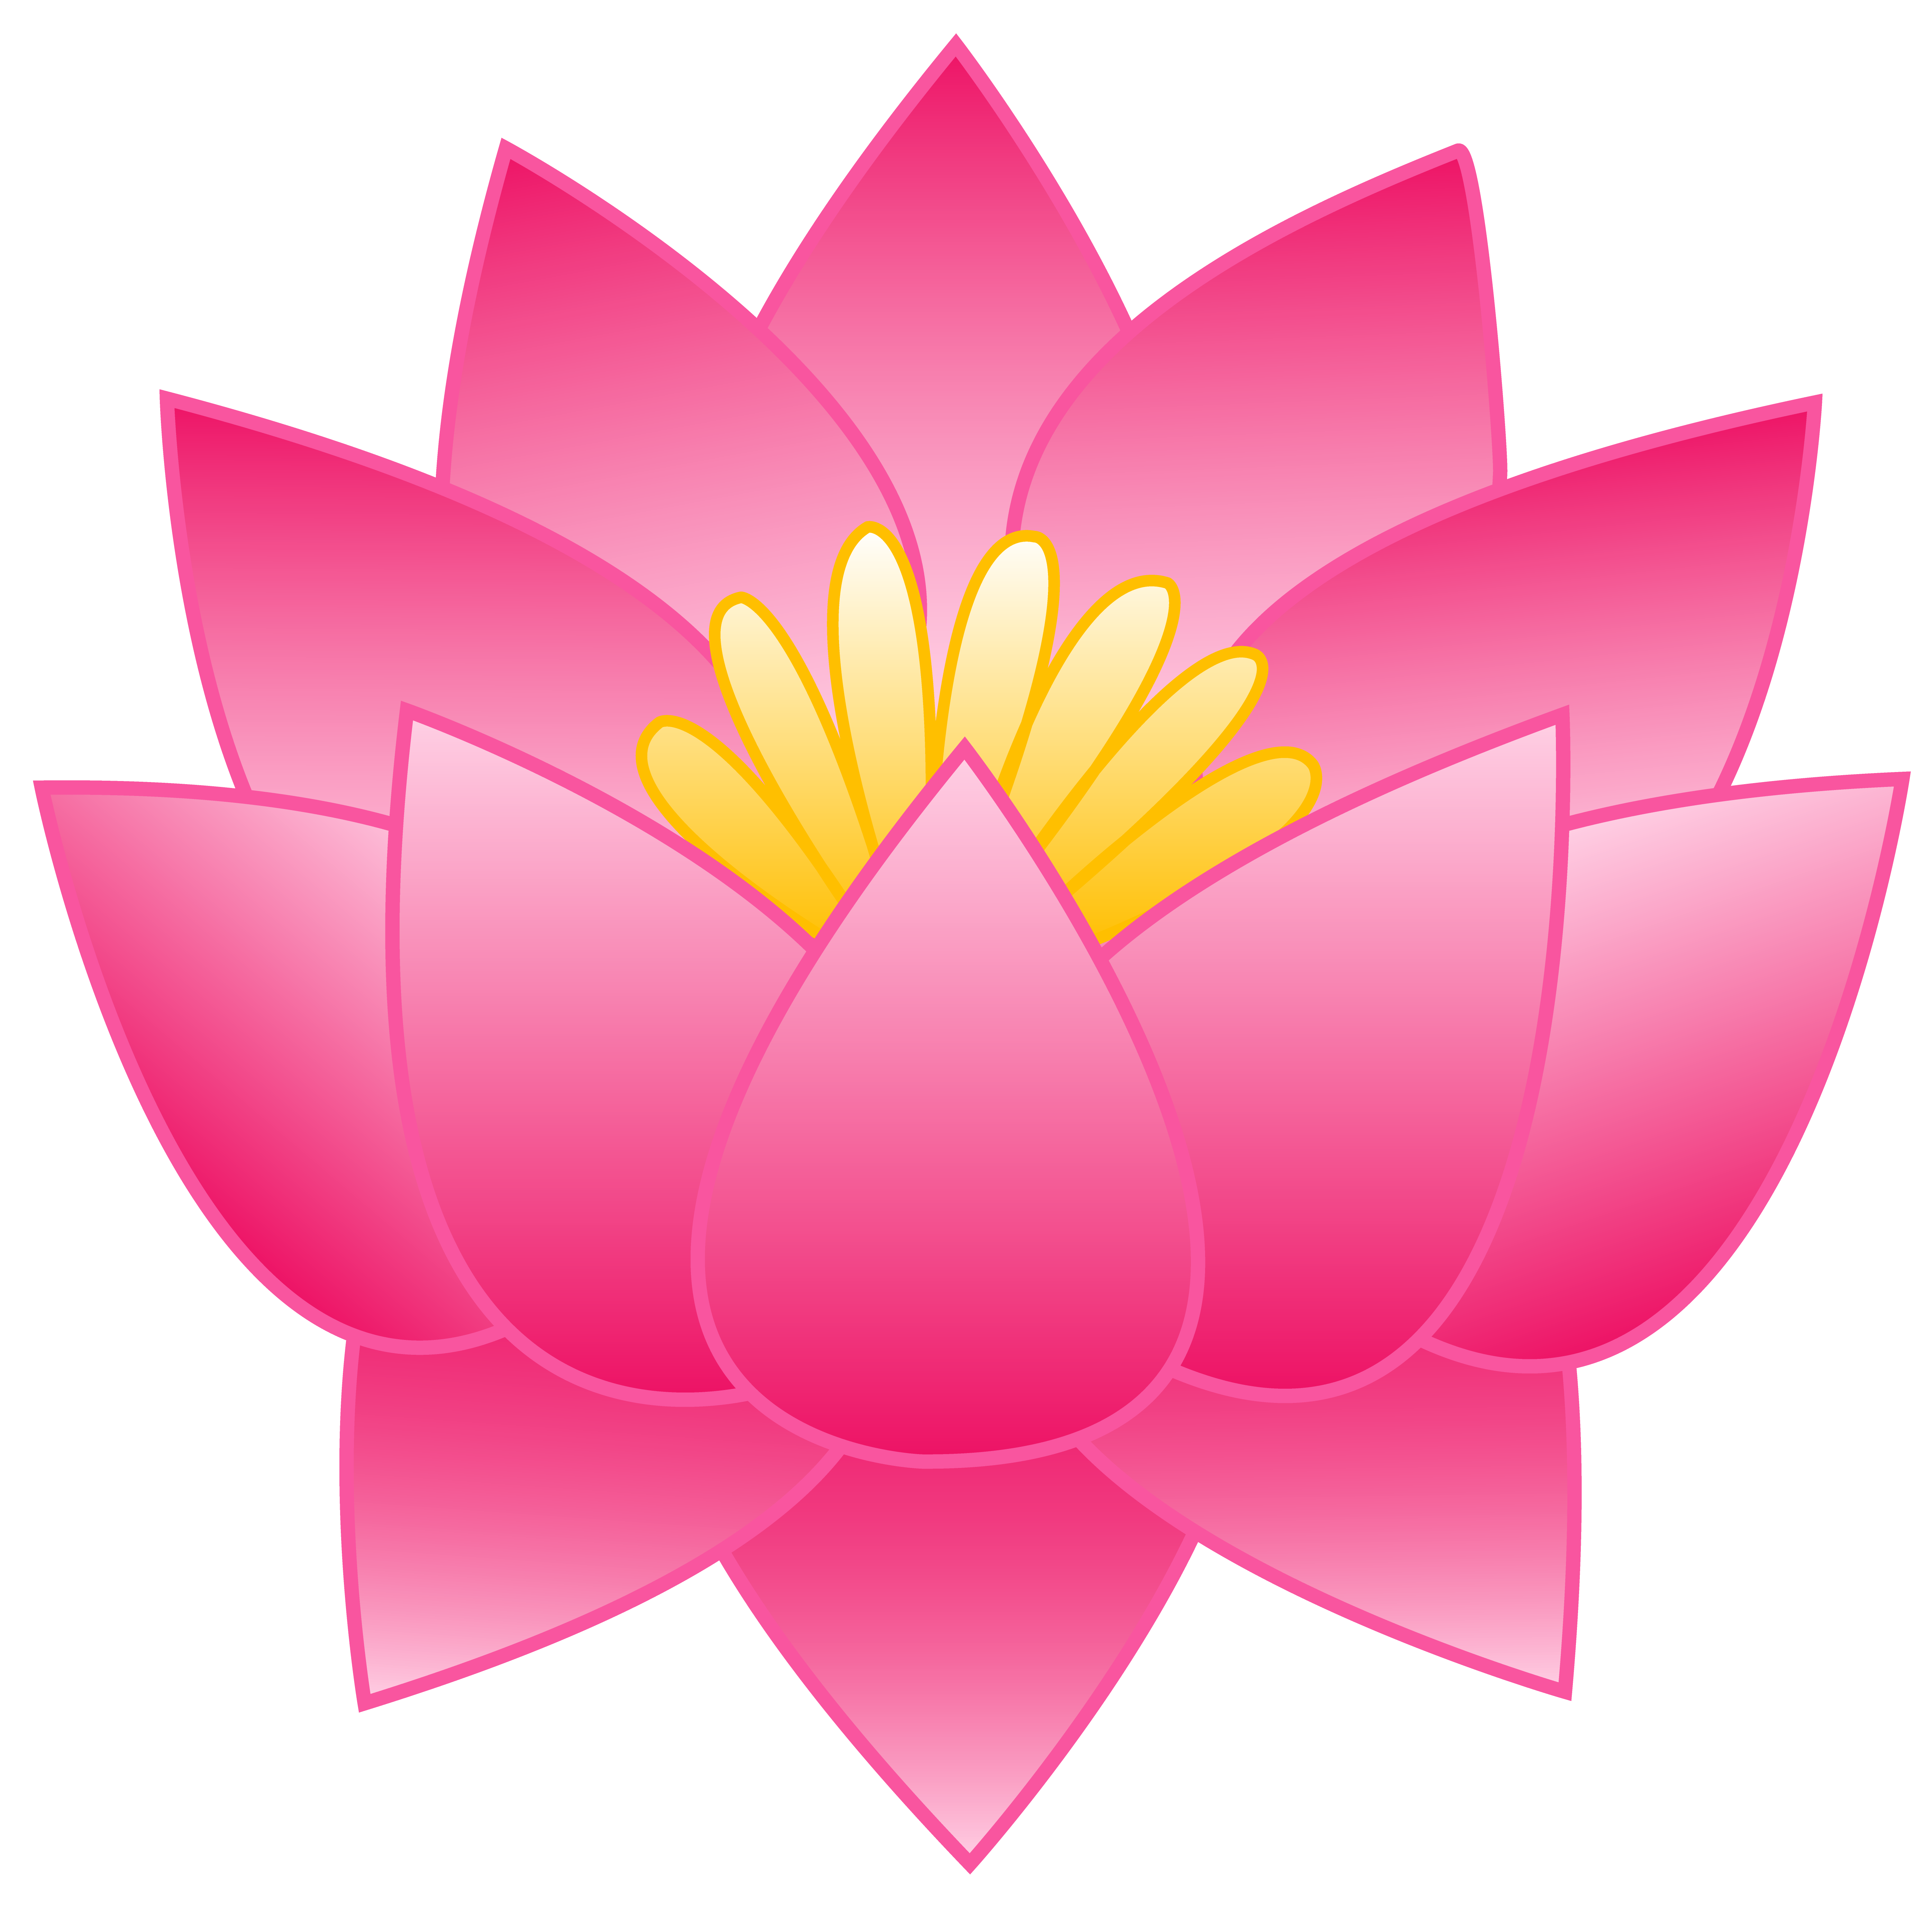 13 Lotus Flower Graphic Images